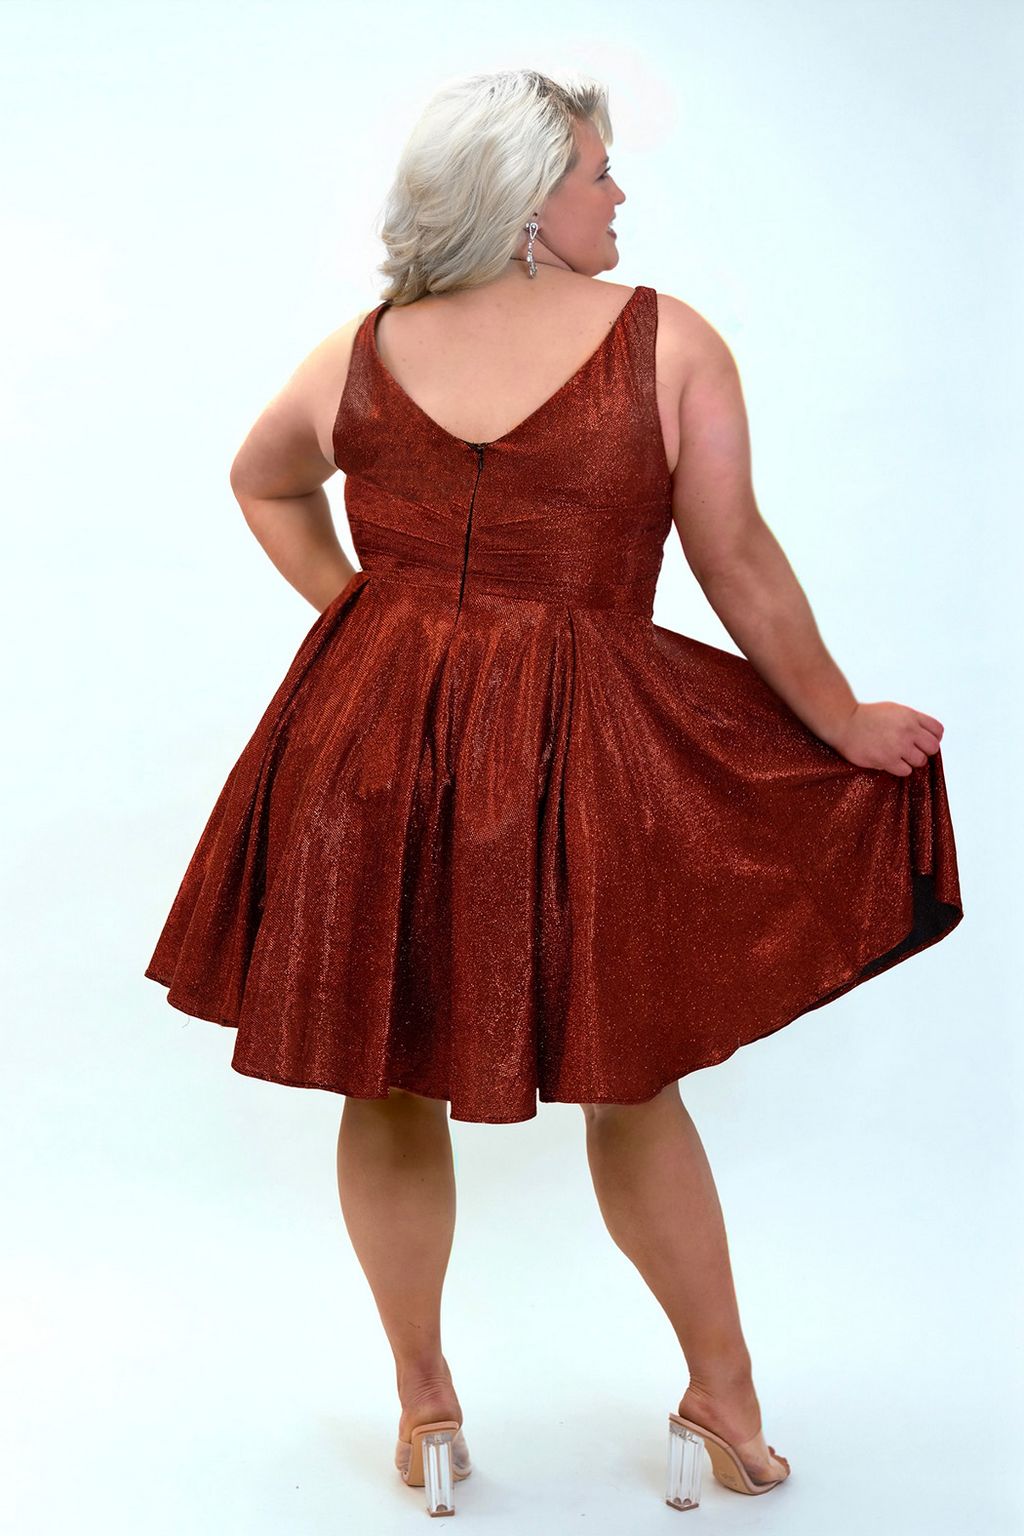 Plus Size Dresses Plus Size Short Sleeveless Homecoming Dress Red